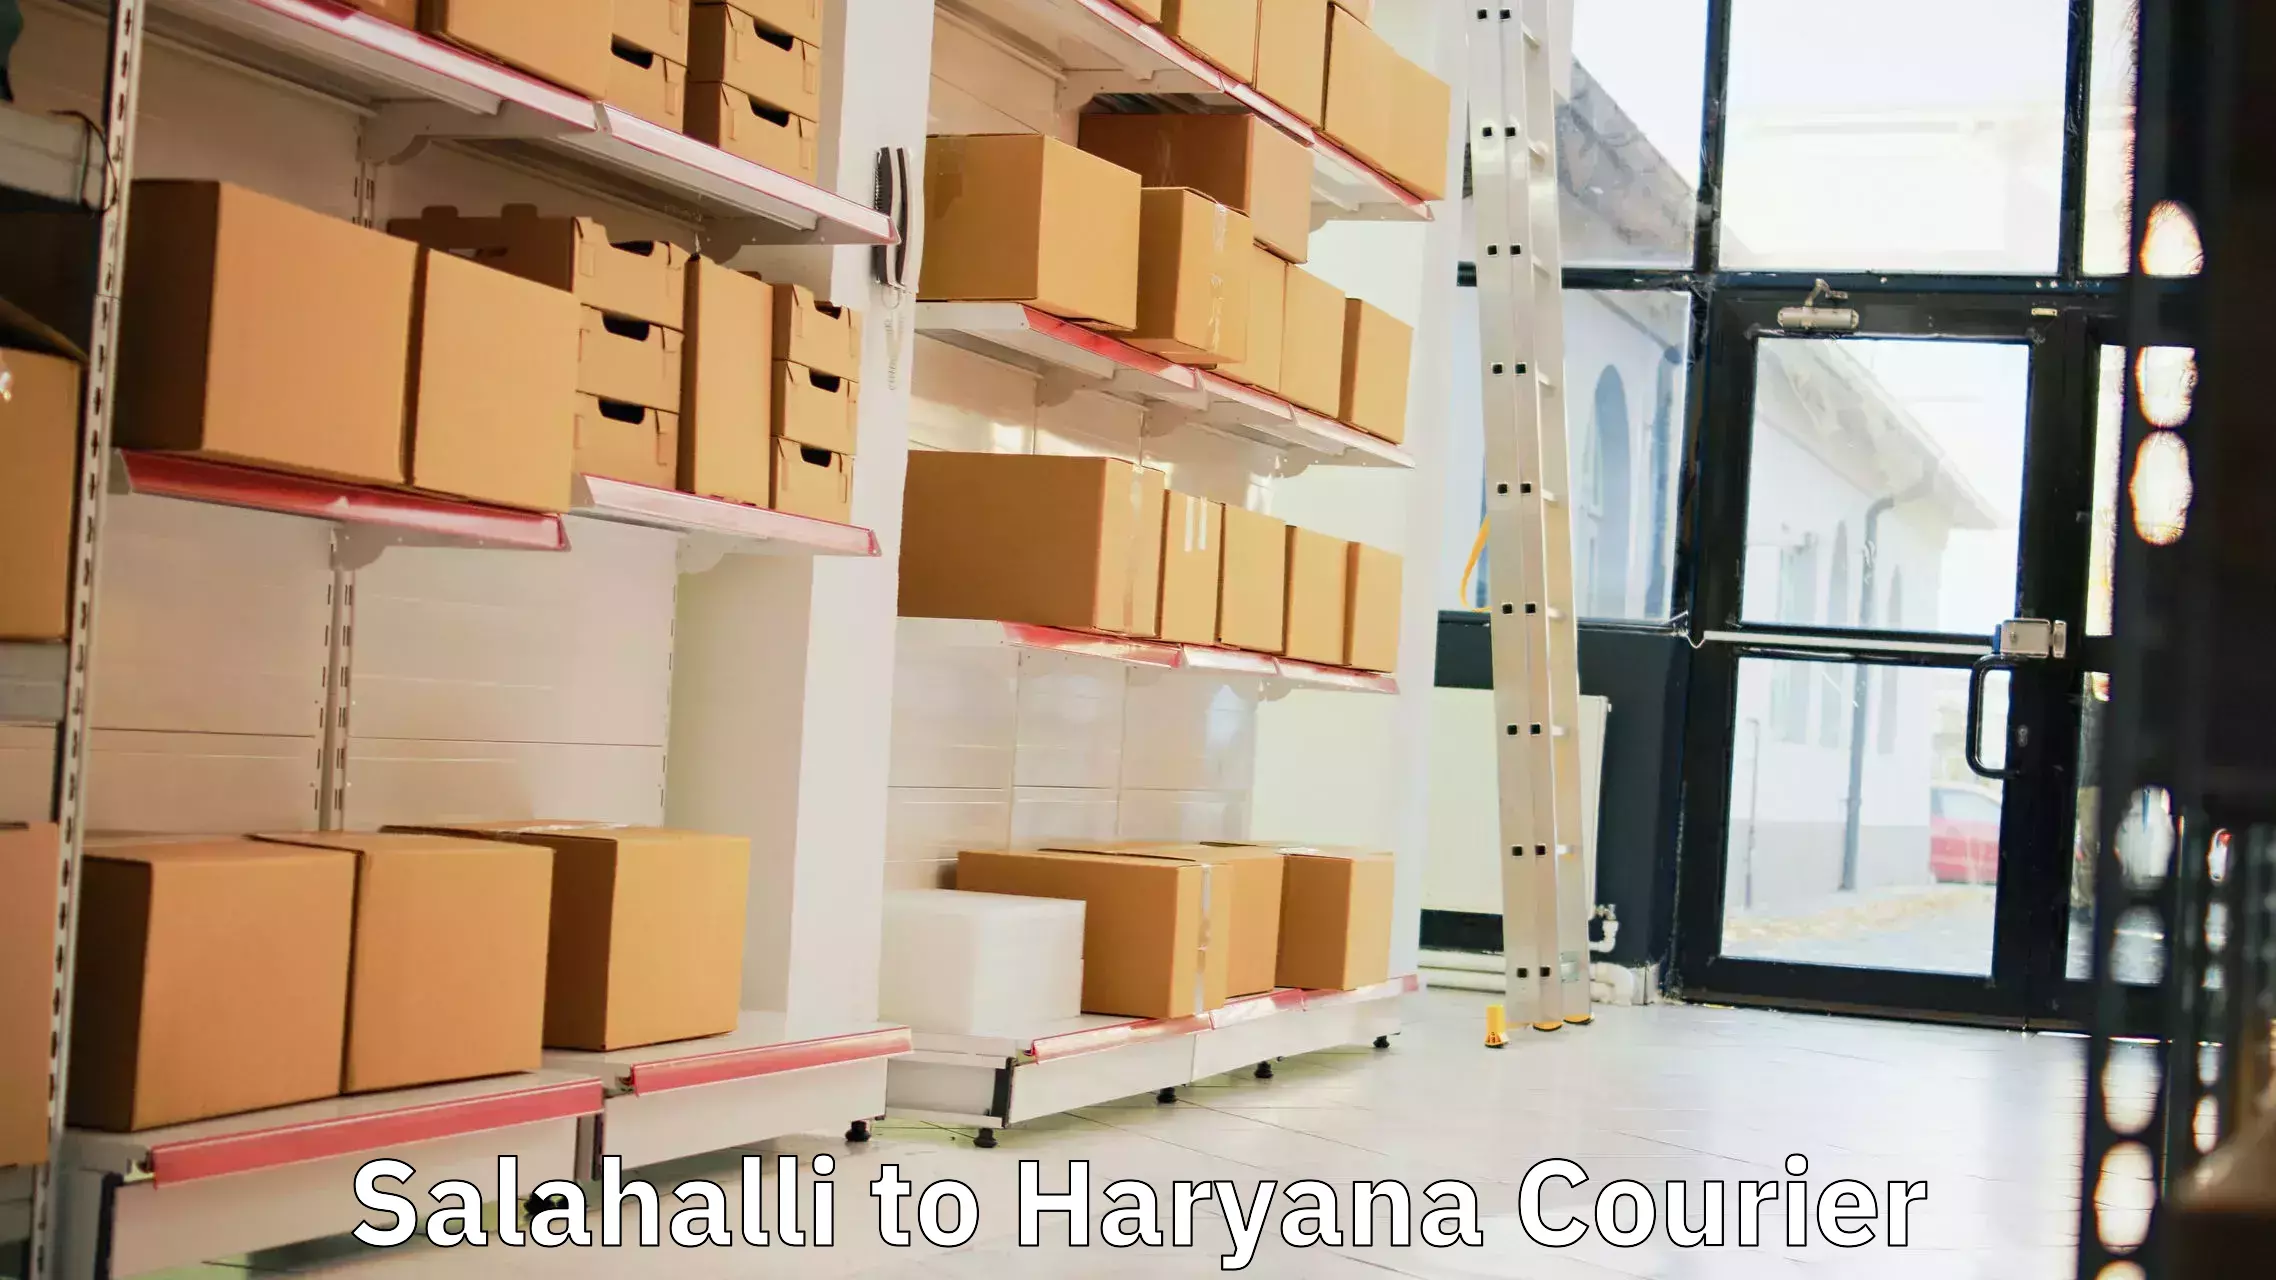 Courier service partnerships Salahalli to Bahadurgarh